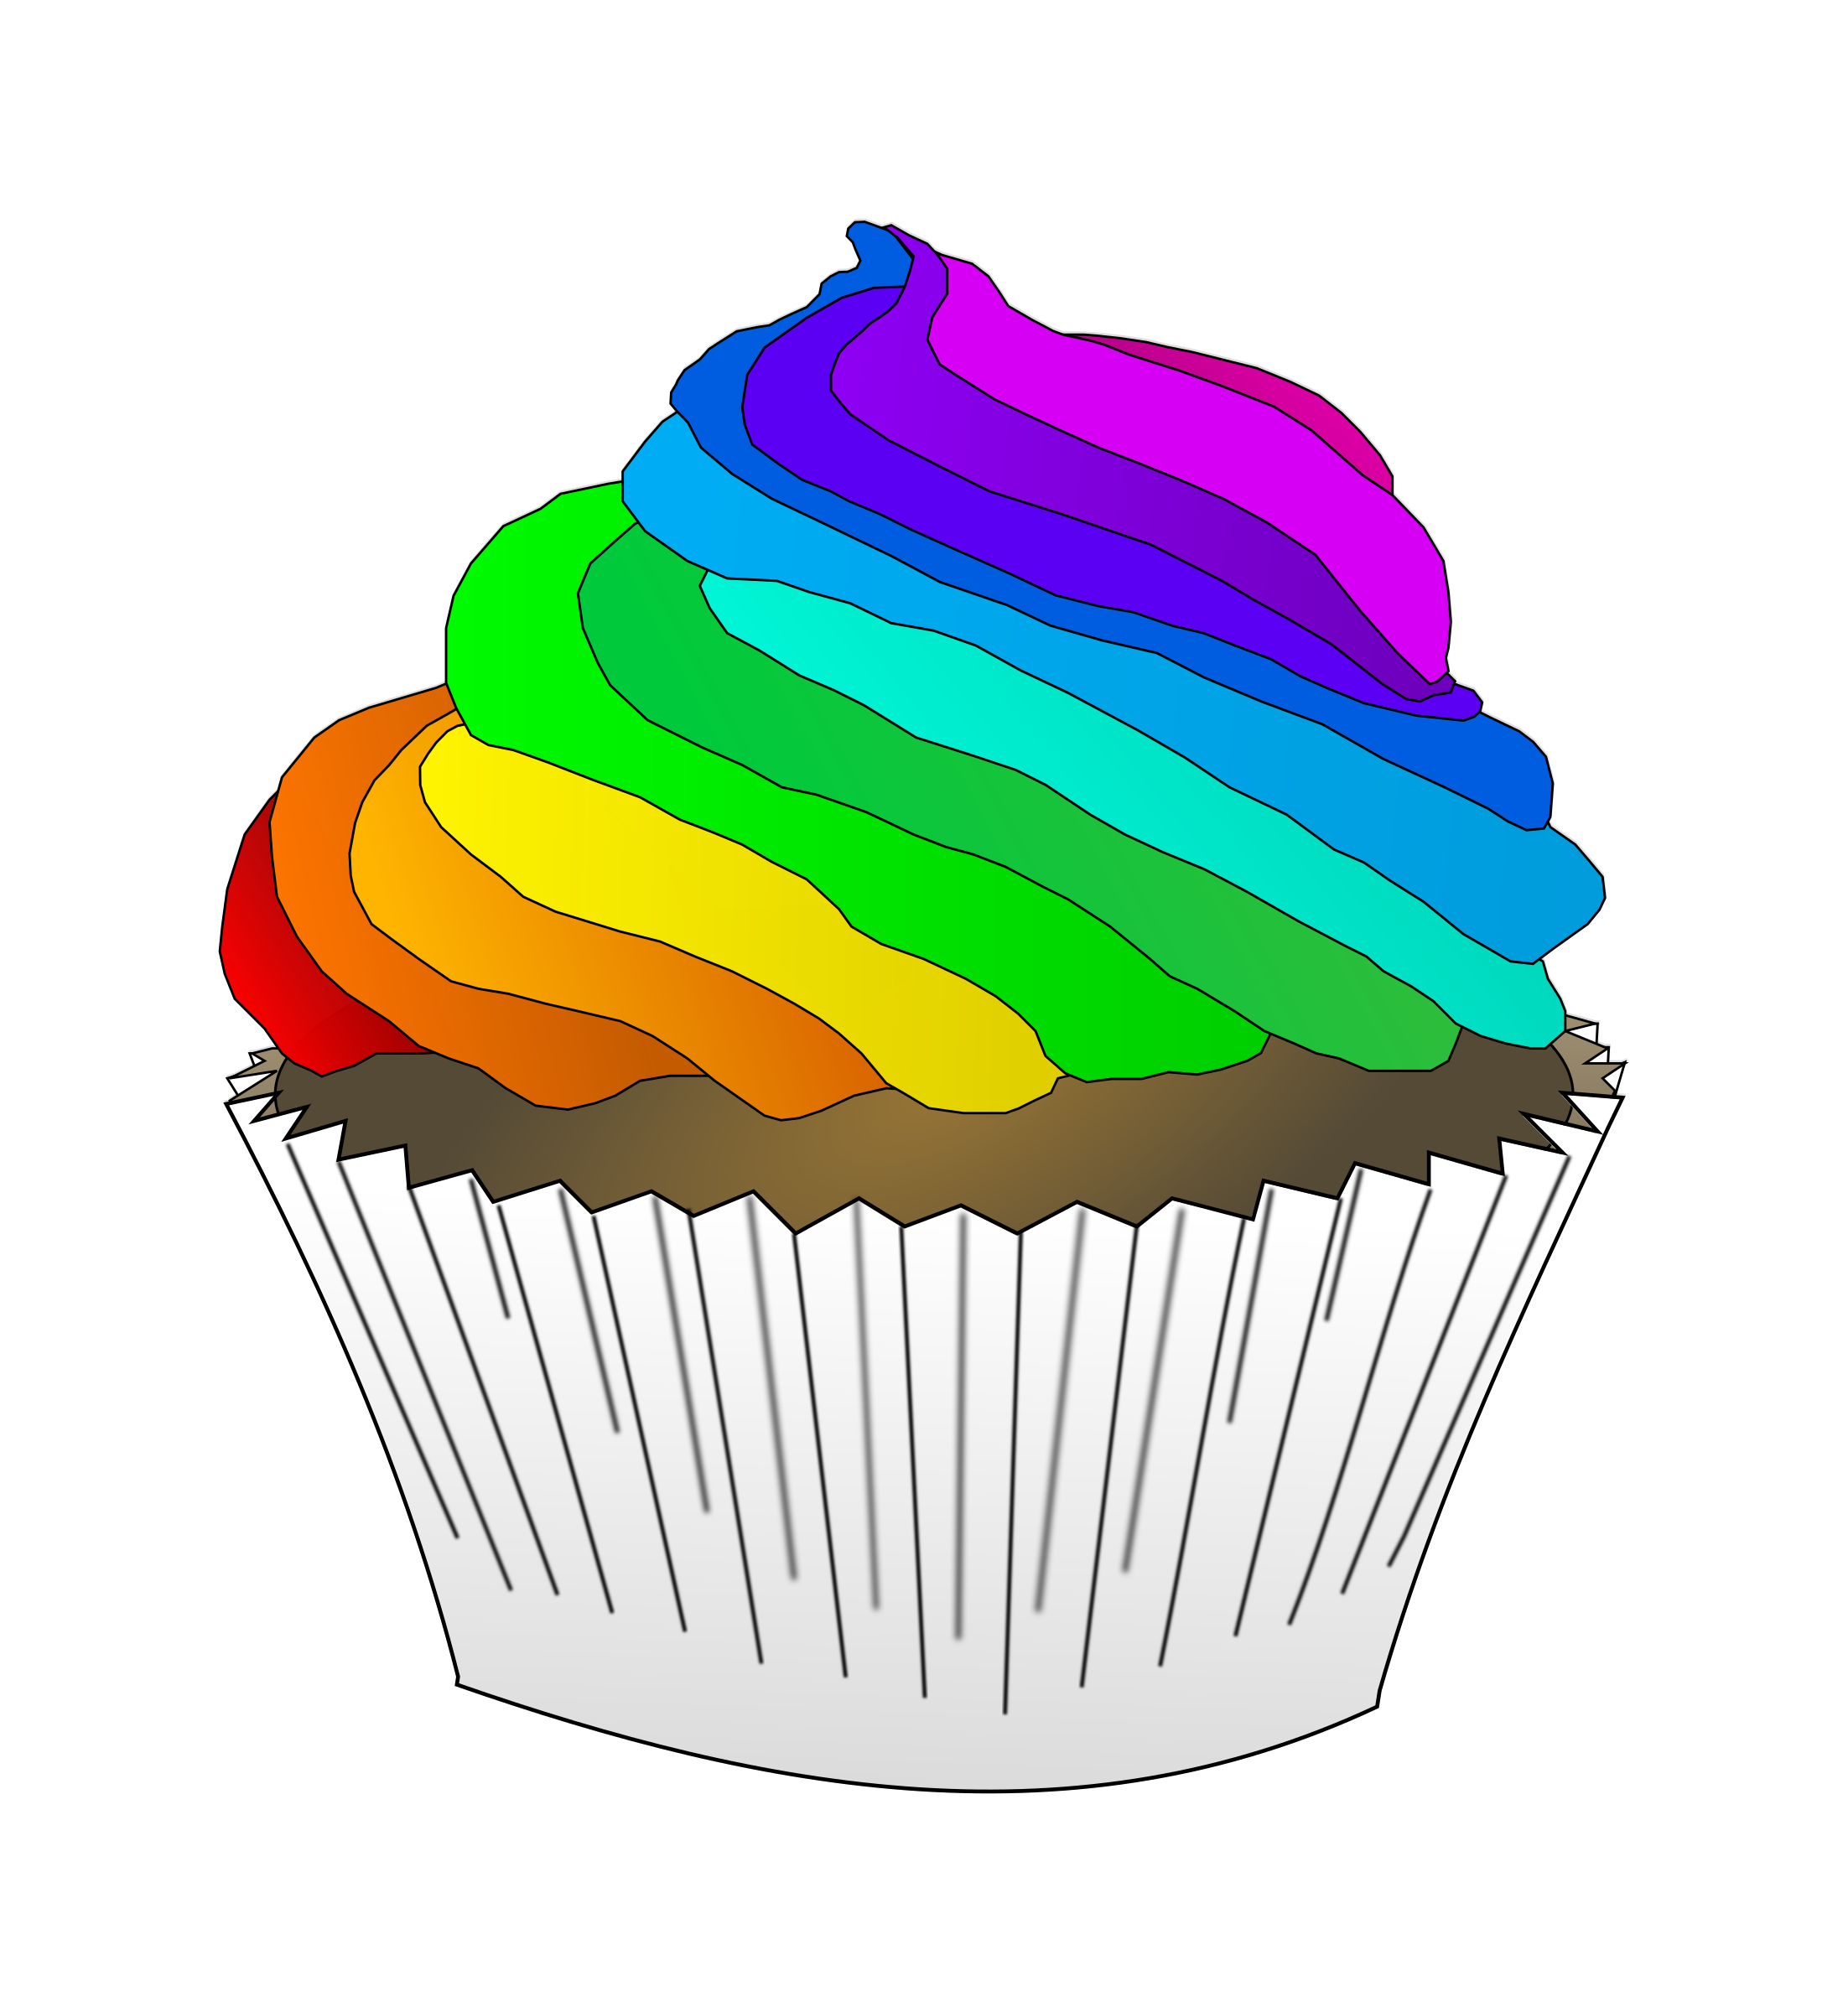 Chocolate rainbow big image. Muffins clipart colourful cupcake